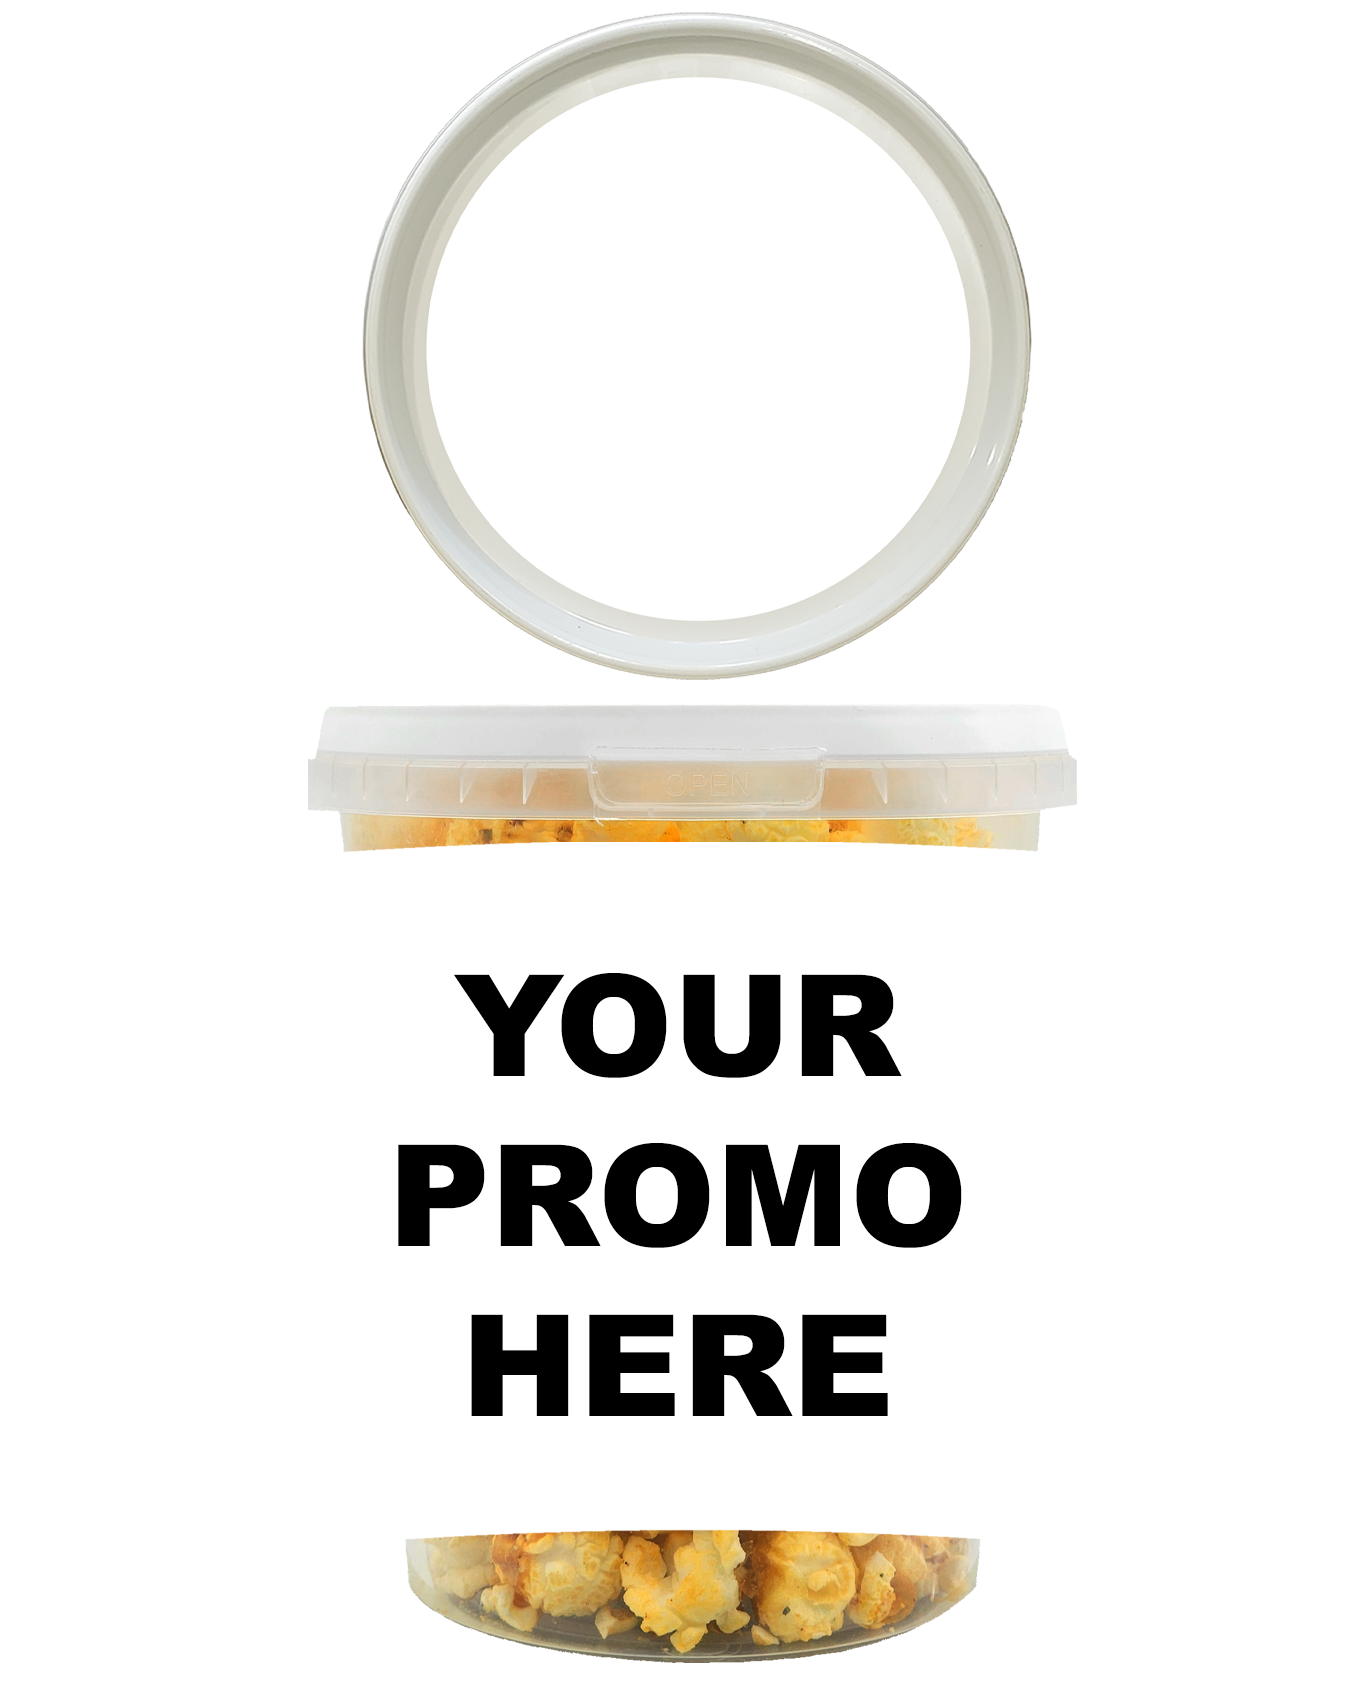 Promo Pop™ - Ragin' Cajun Classic (as low as $4.49 per bucket) Case of 12 Price